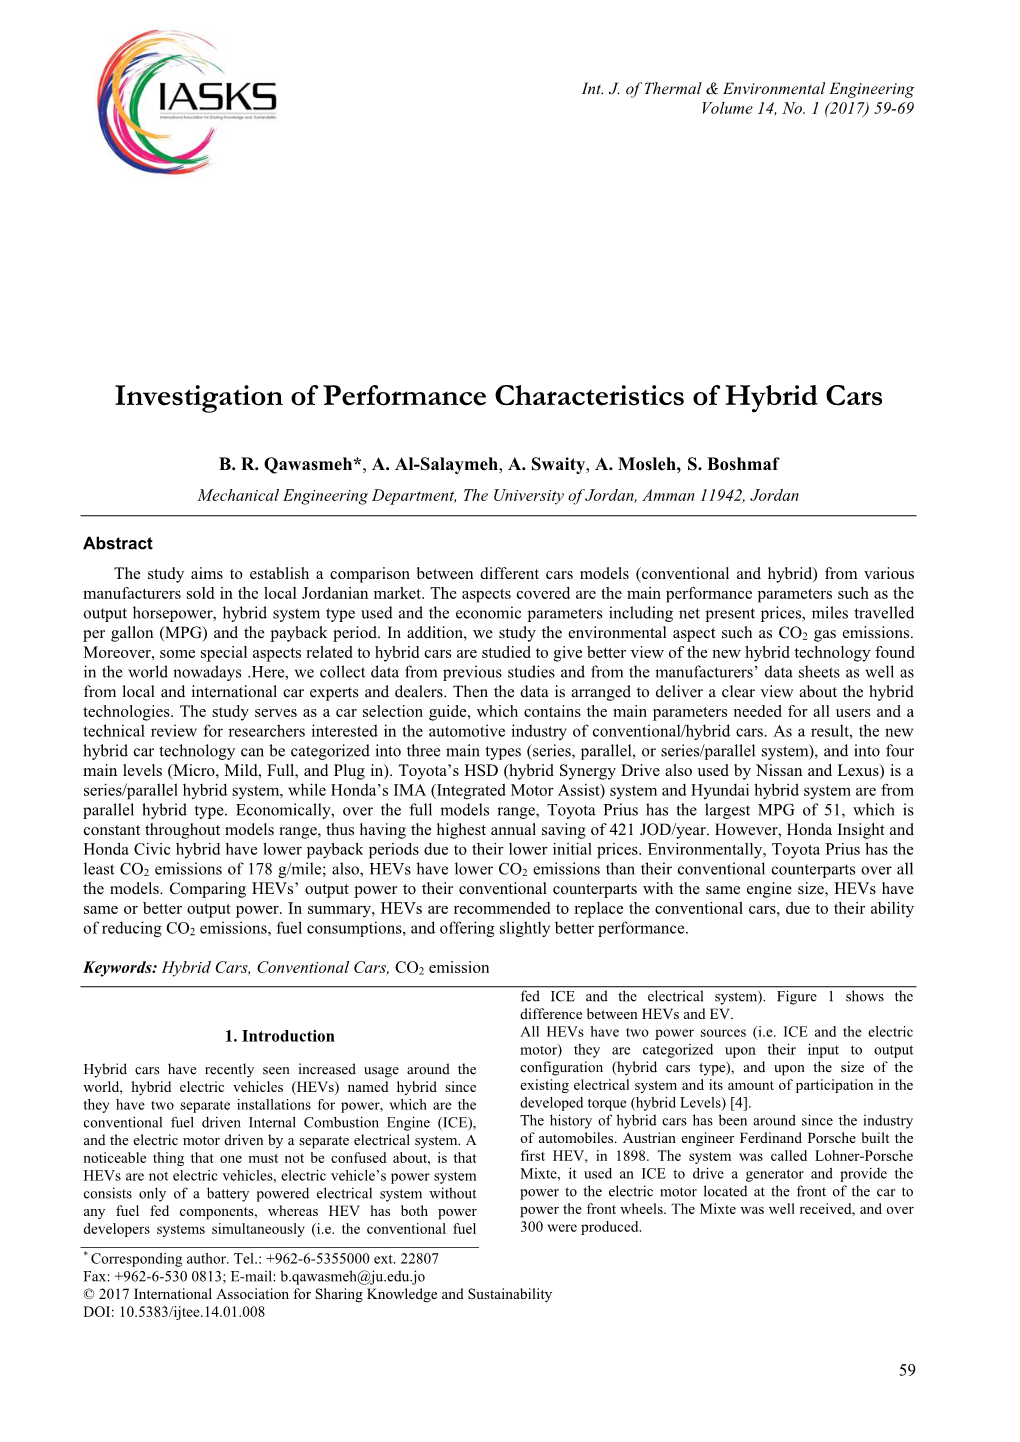 Investigation of Performance Characteristics of Hybrid Cars